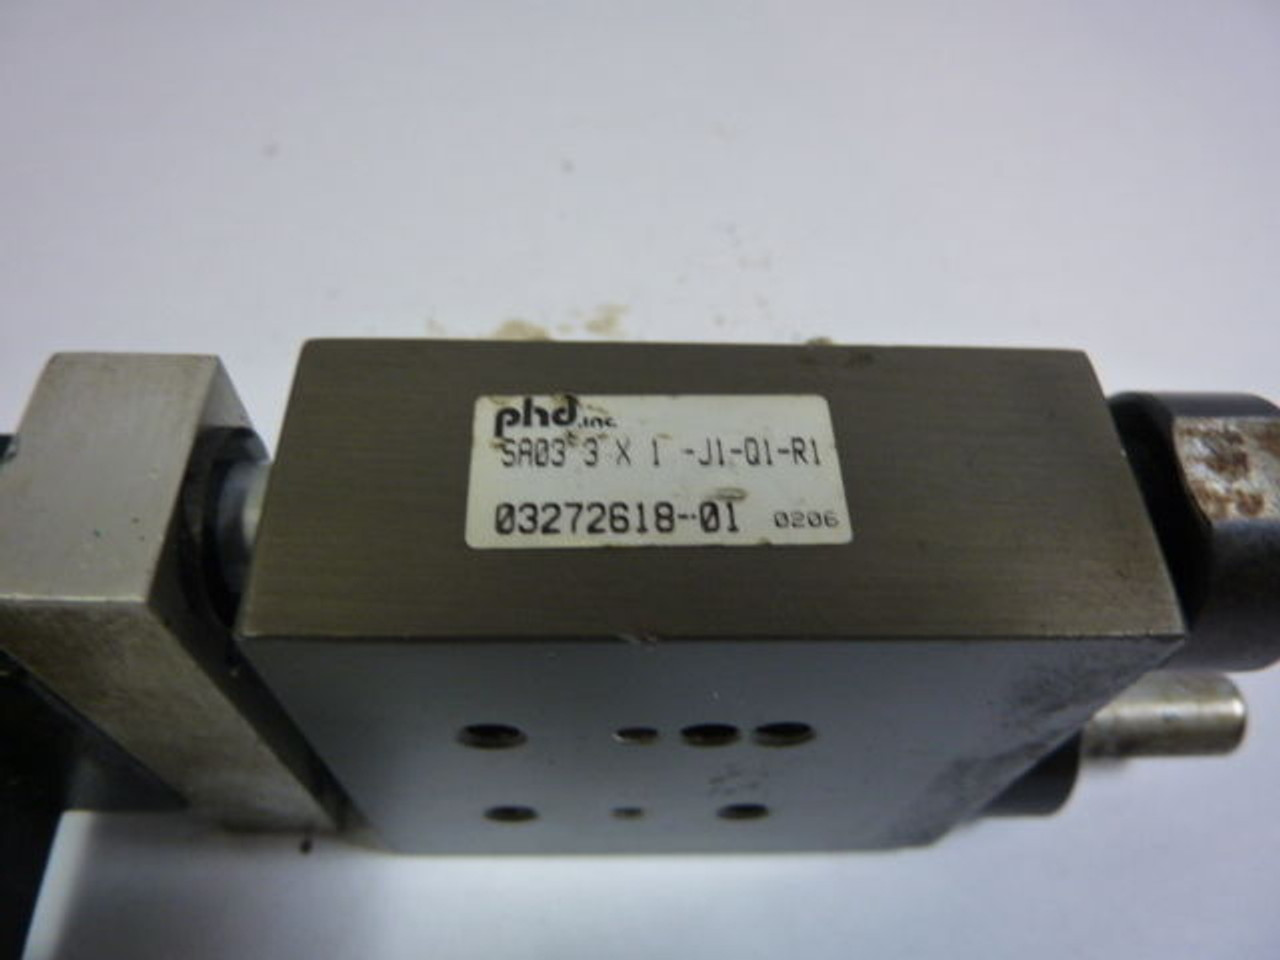 PHD SA033x1-J1-Q1-R1 Pneumatic Cylinder USED